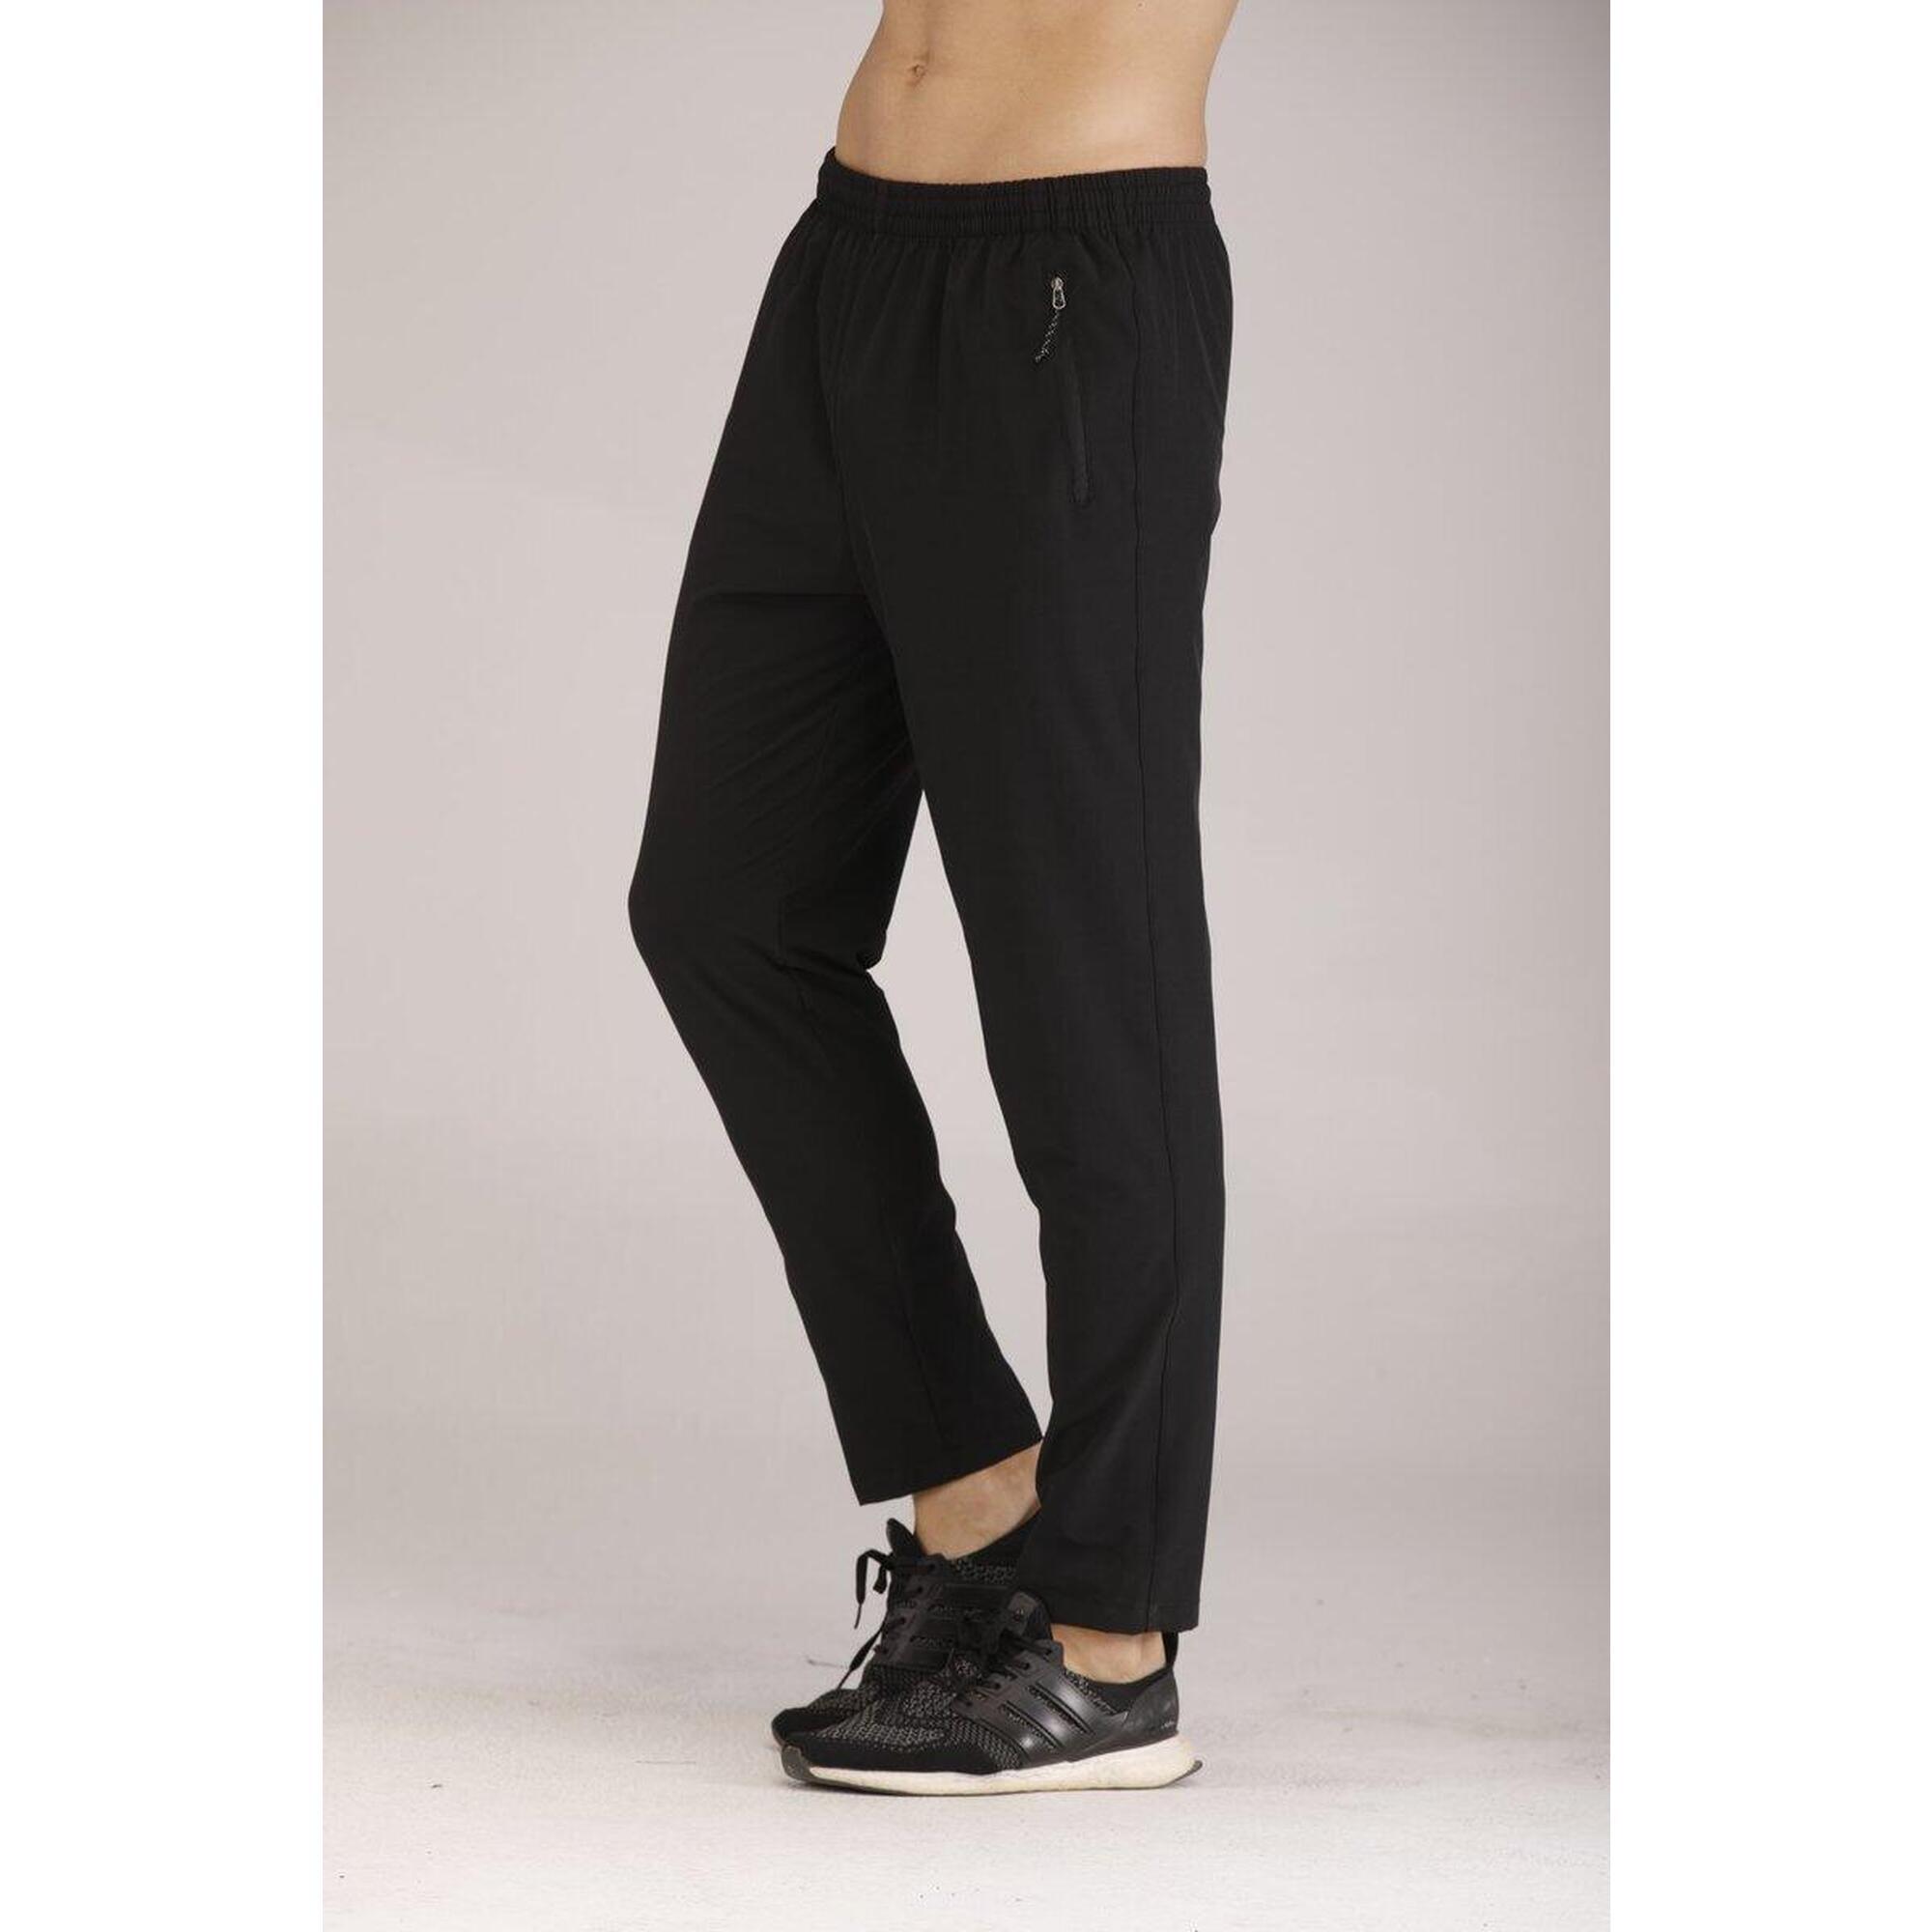 Unisex Quick Dry Tapered fit design Jogging Pants - Black